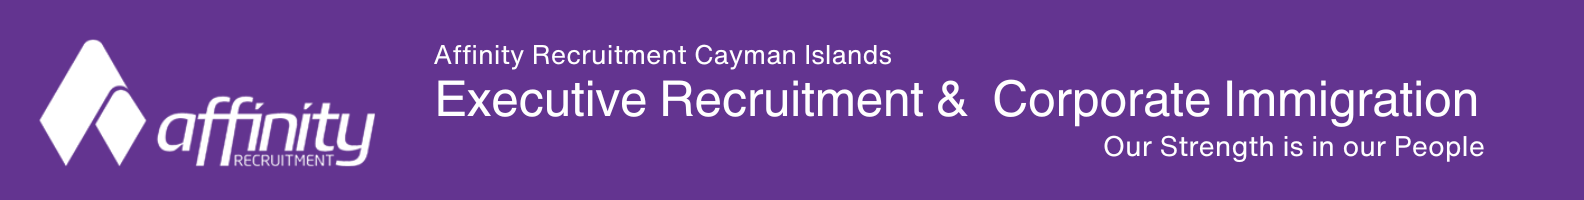 executive recruitment cayman islands